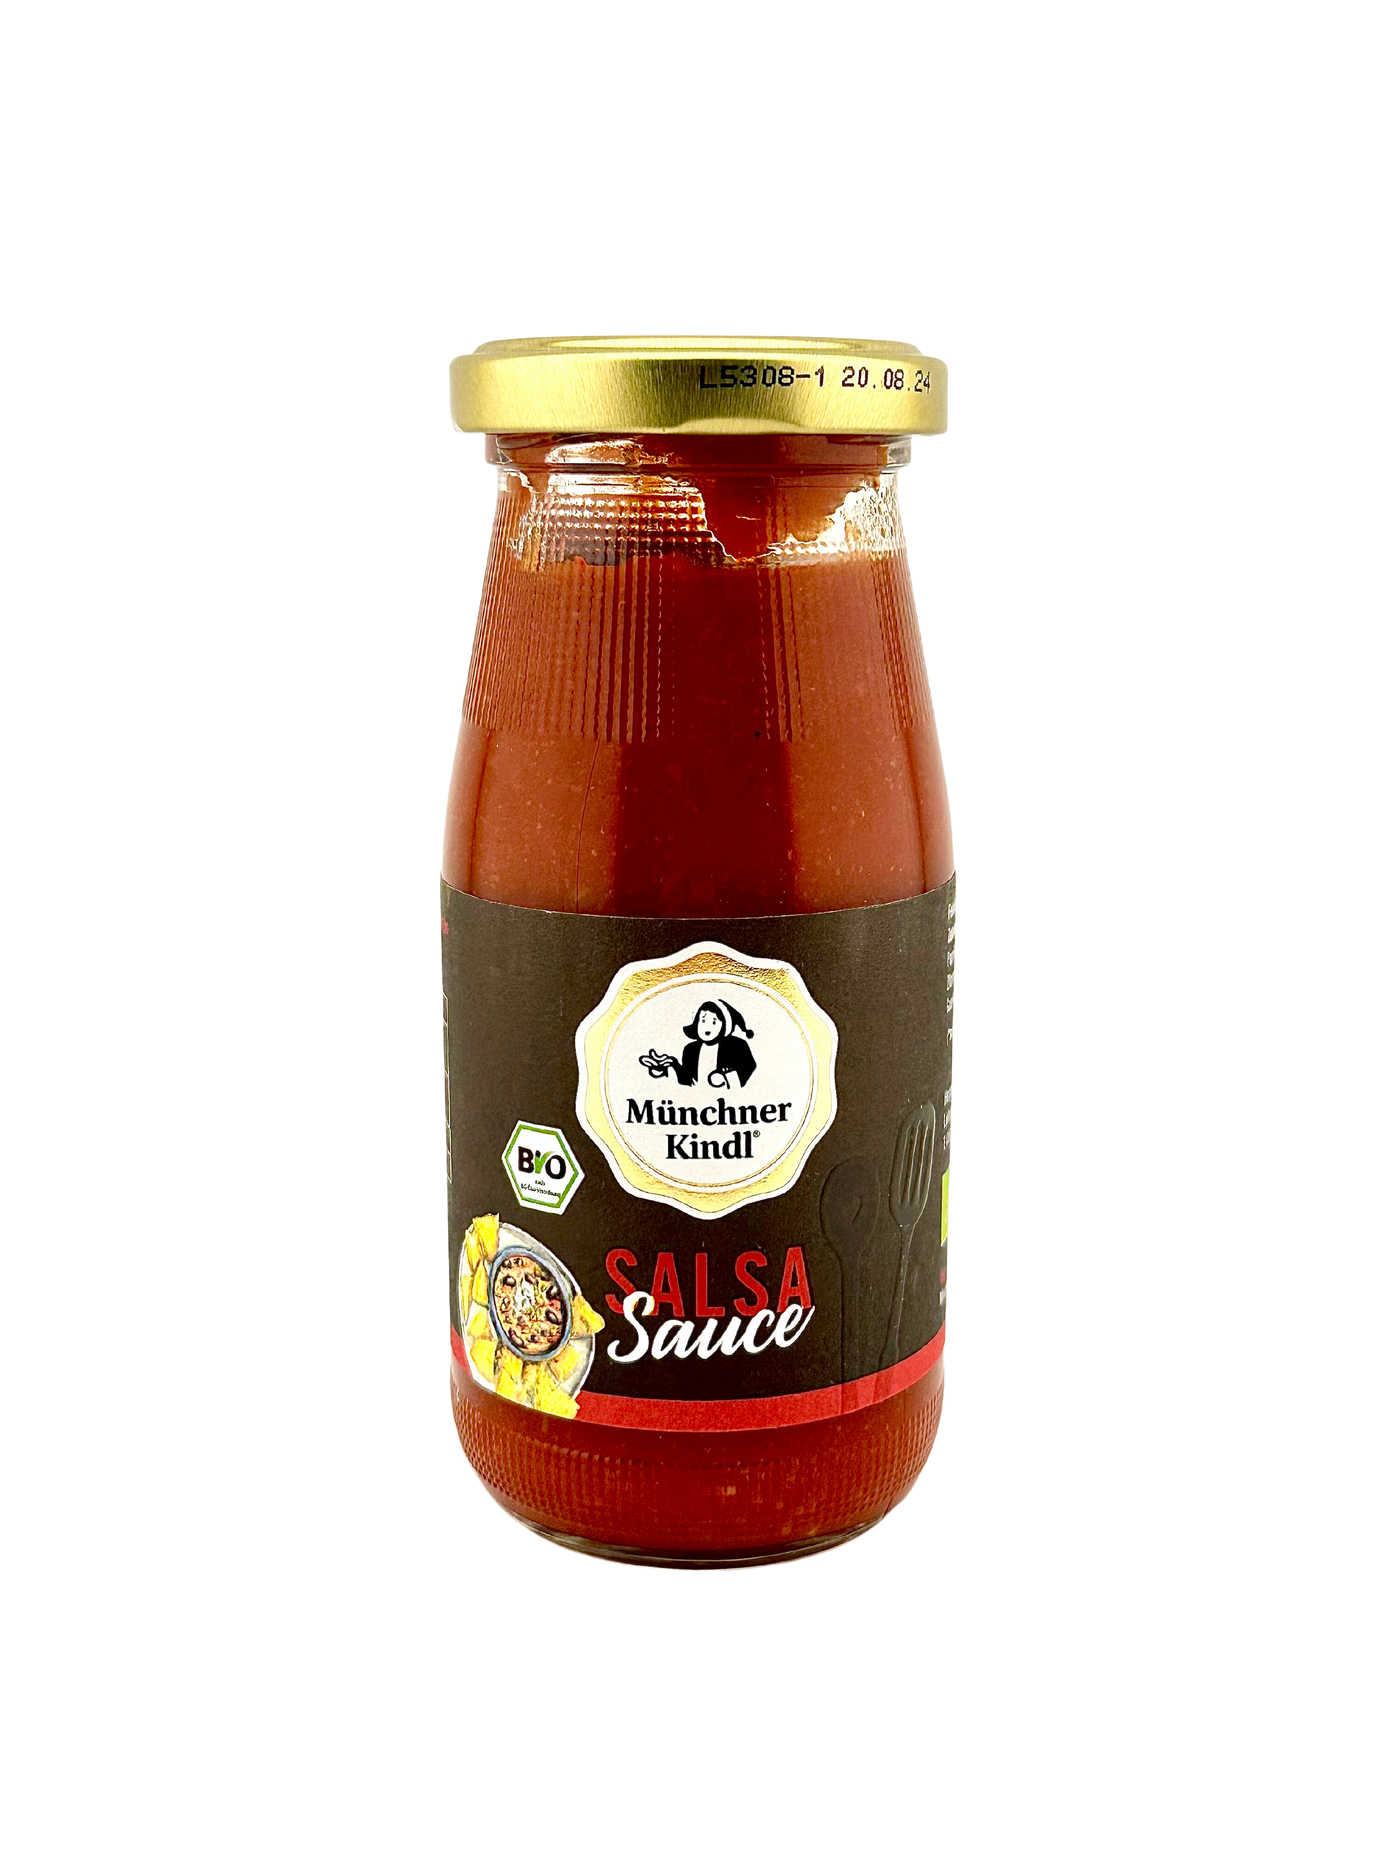 BIO Salsa Sauce - Münchner Kindl - 250ml